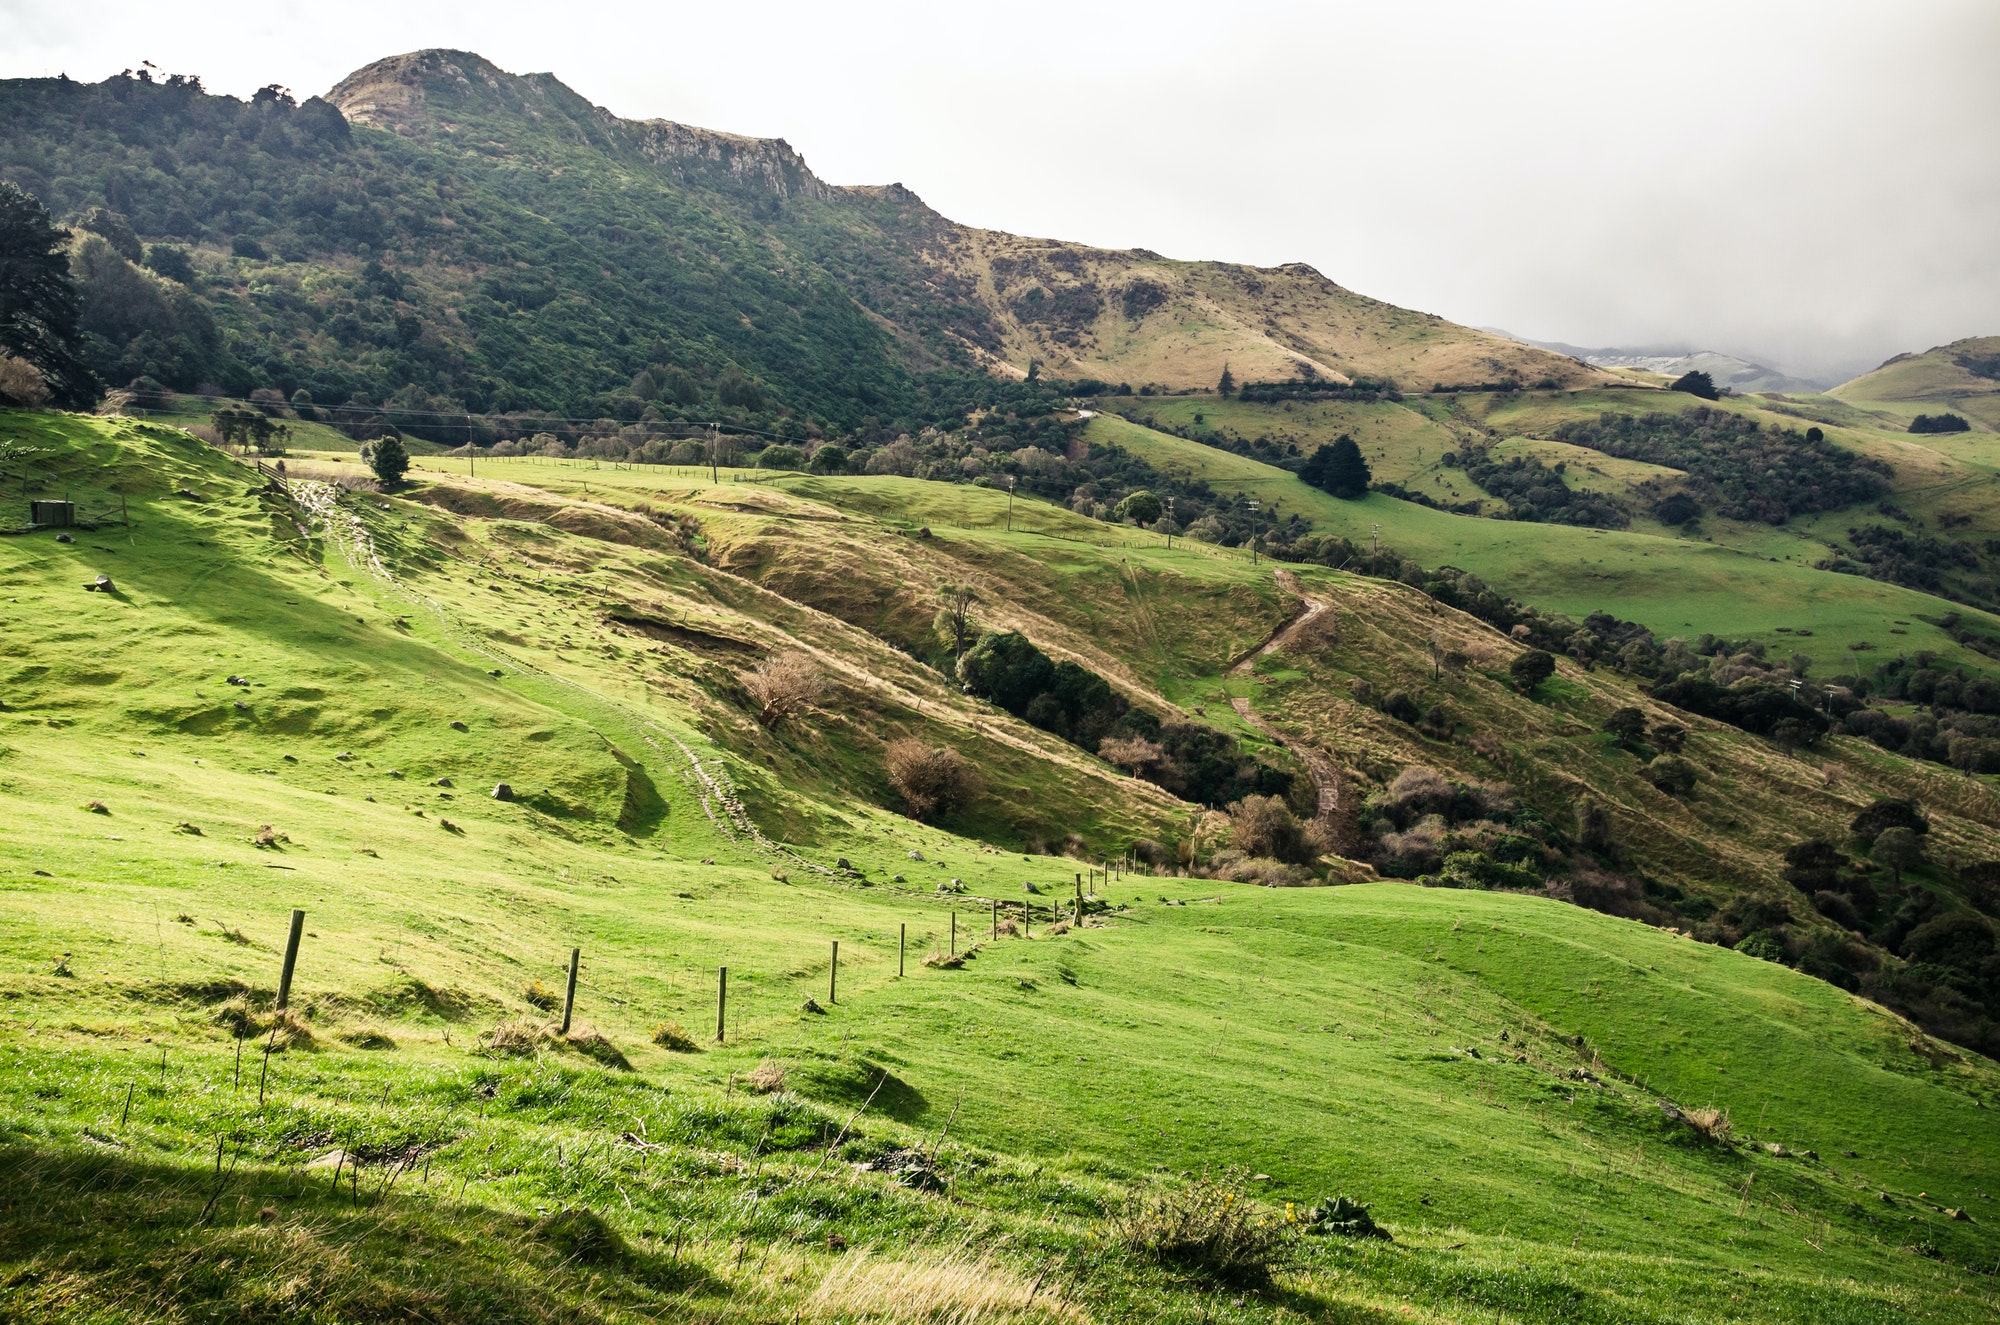 Lush green landscape of New Zealand